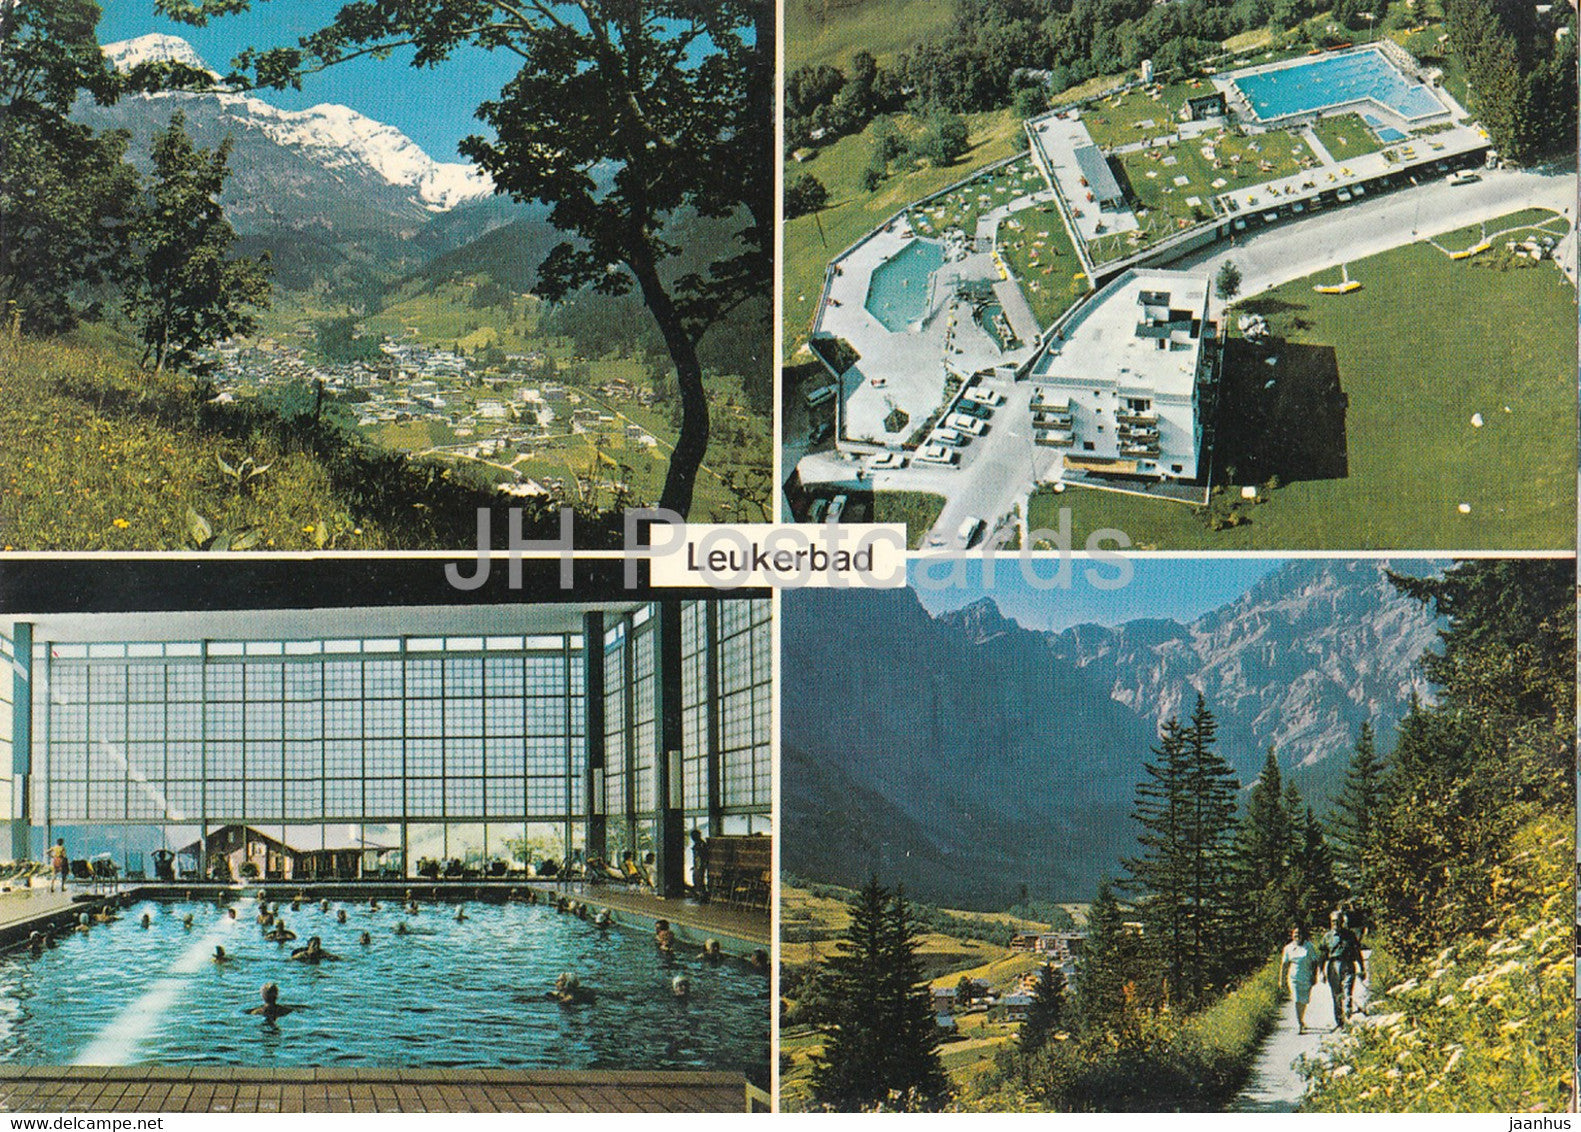 Leukerbad 1401 m - Loeche les Bains - multiview - pool - 50802 - 1972 - Switzerland - used - JH Postcards